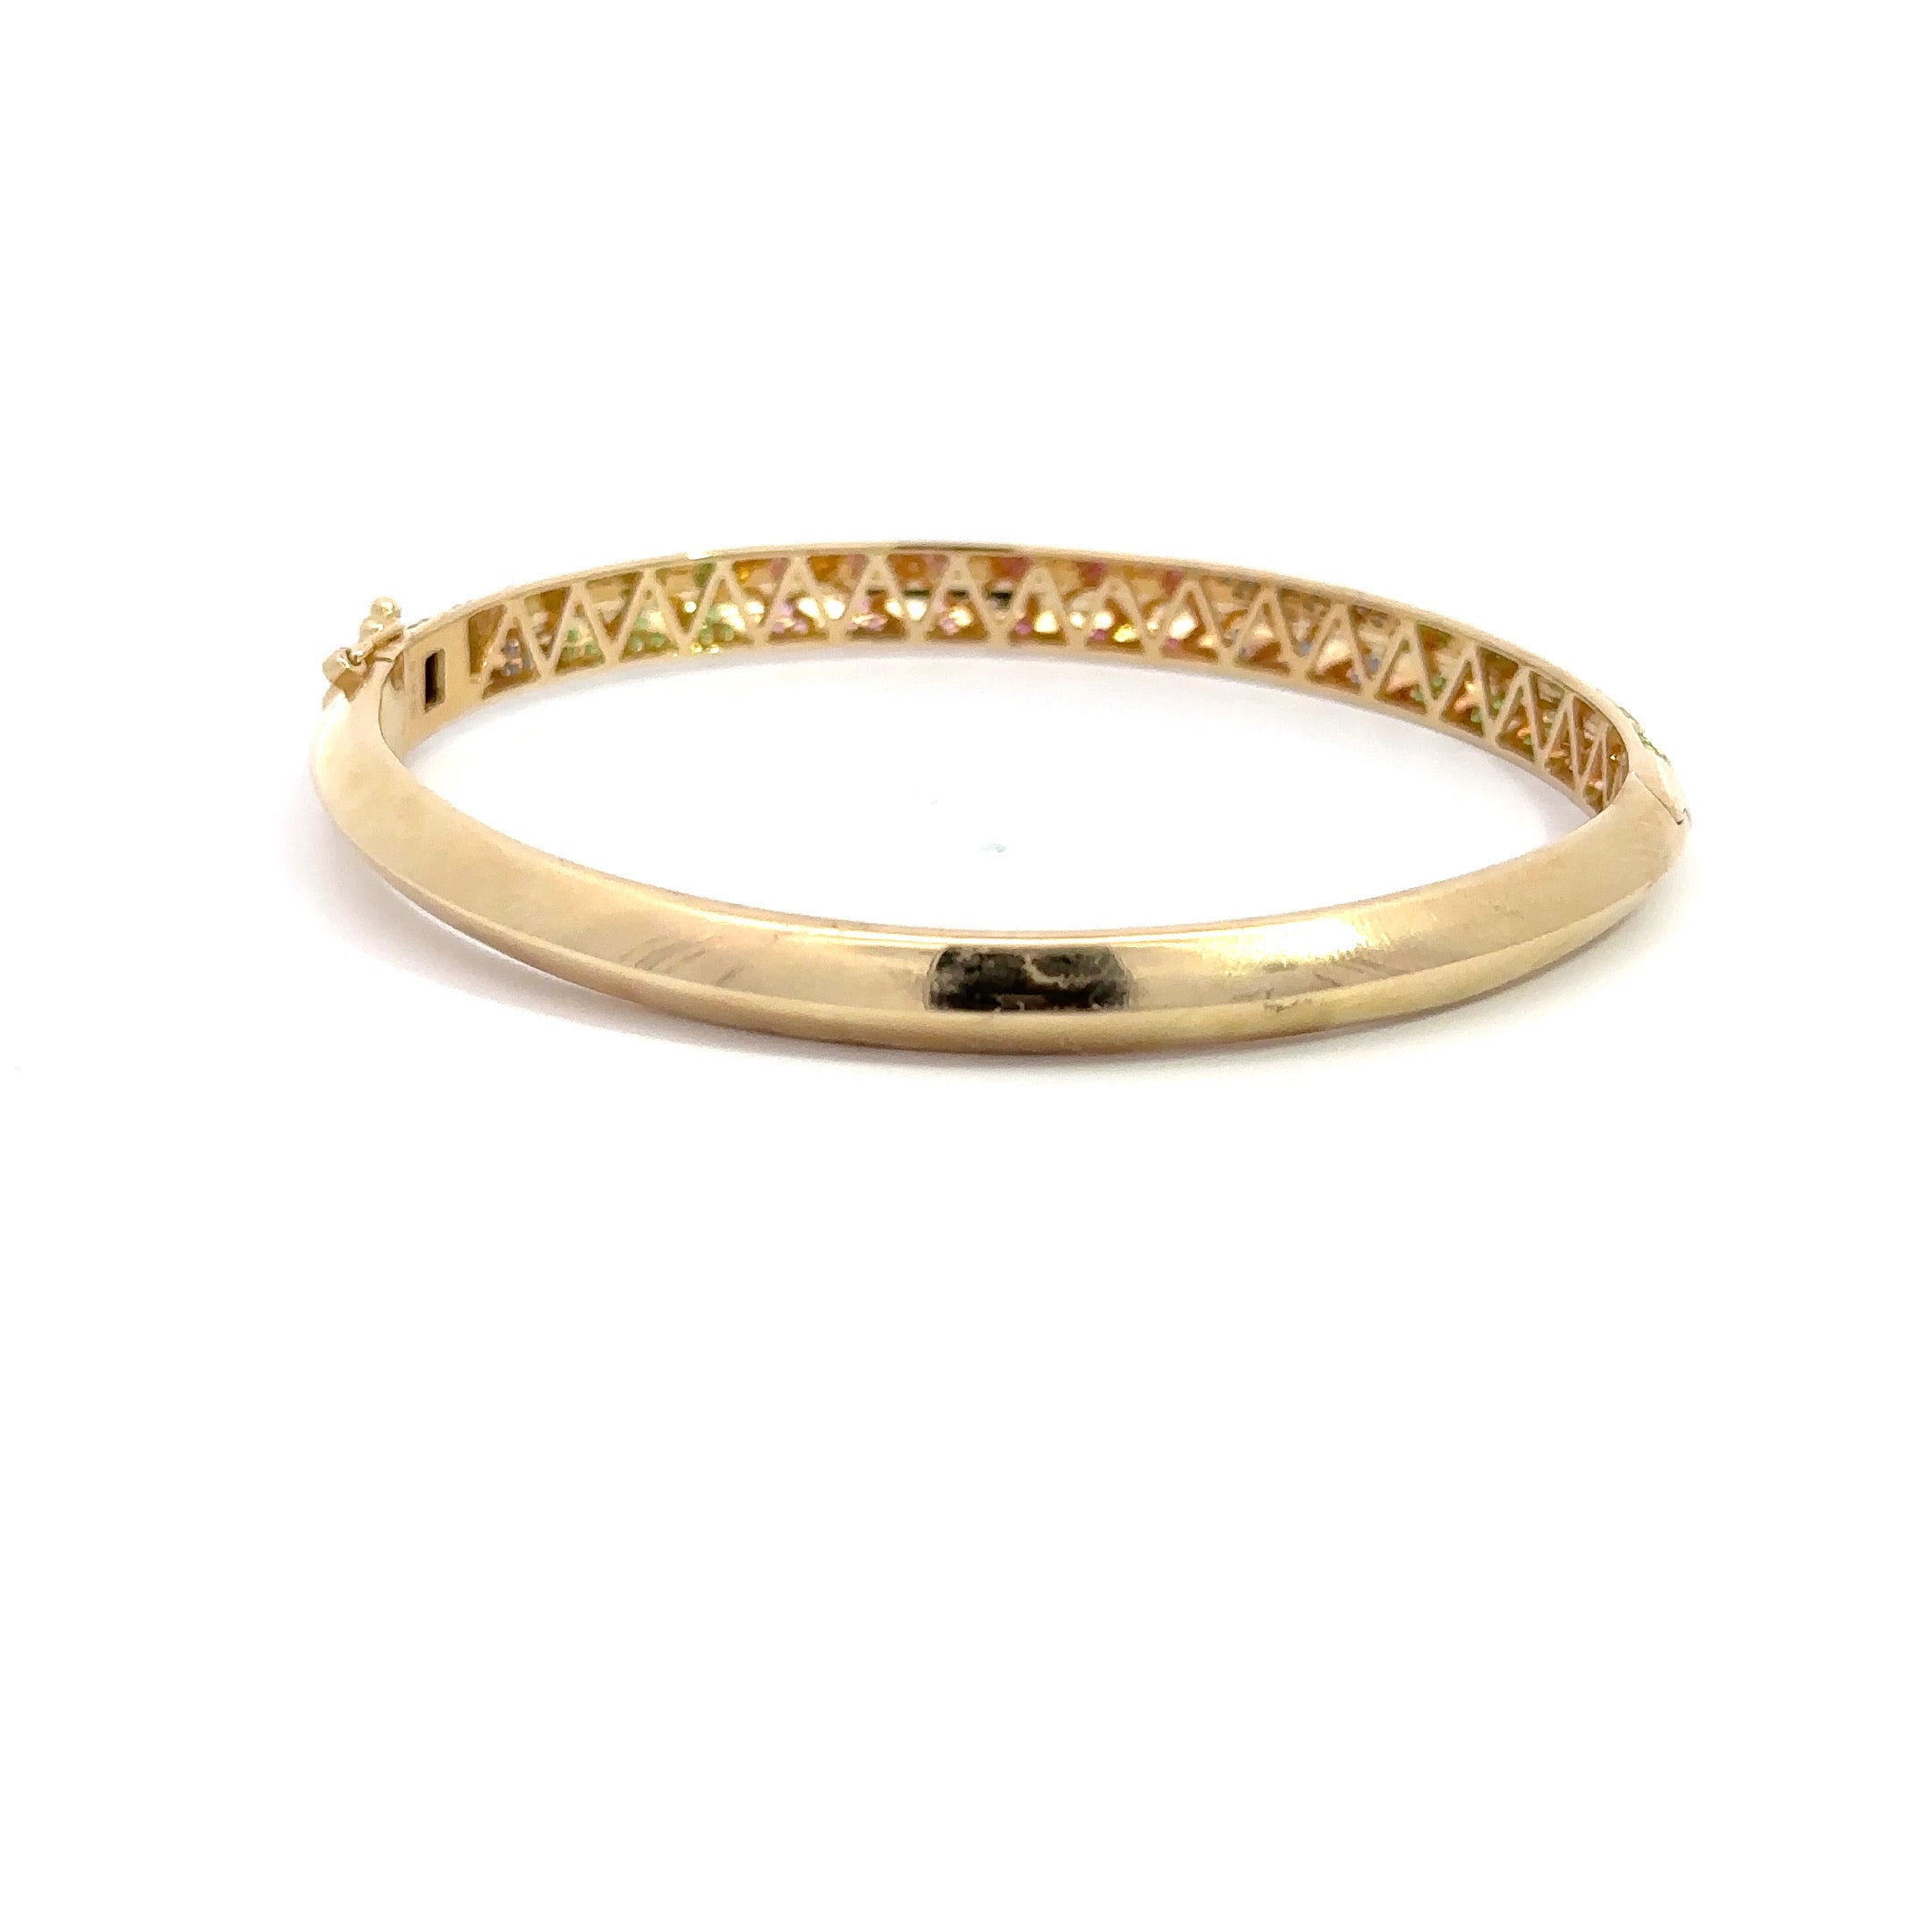 WD1022 14kt gold Mutlti color stones cuff bracelet